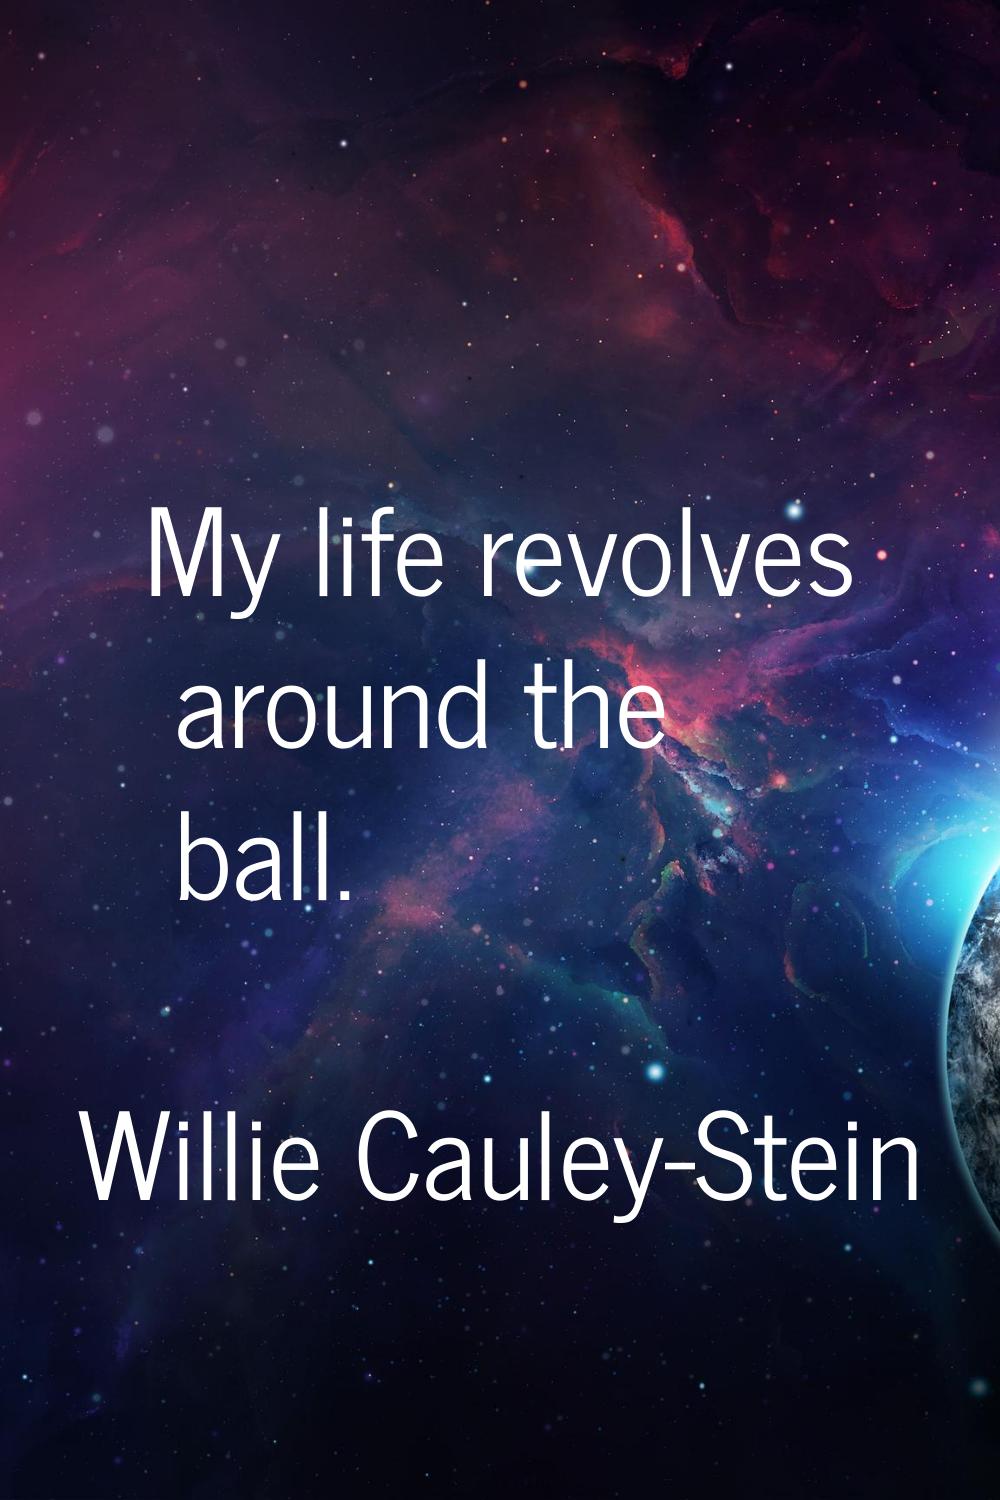 My life revolves around the ball.